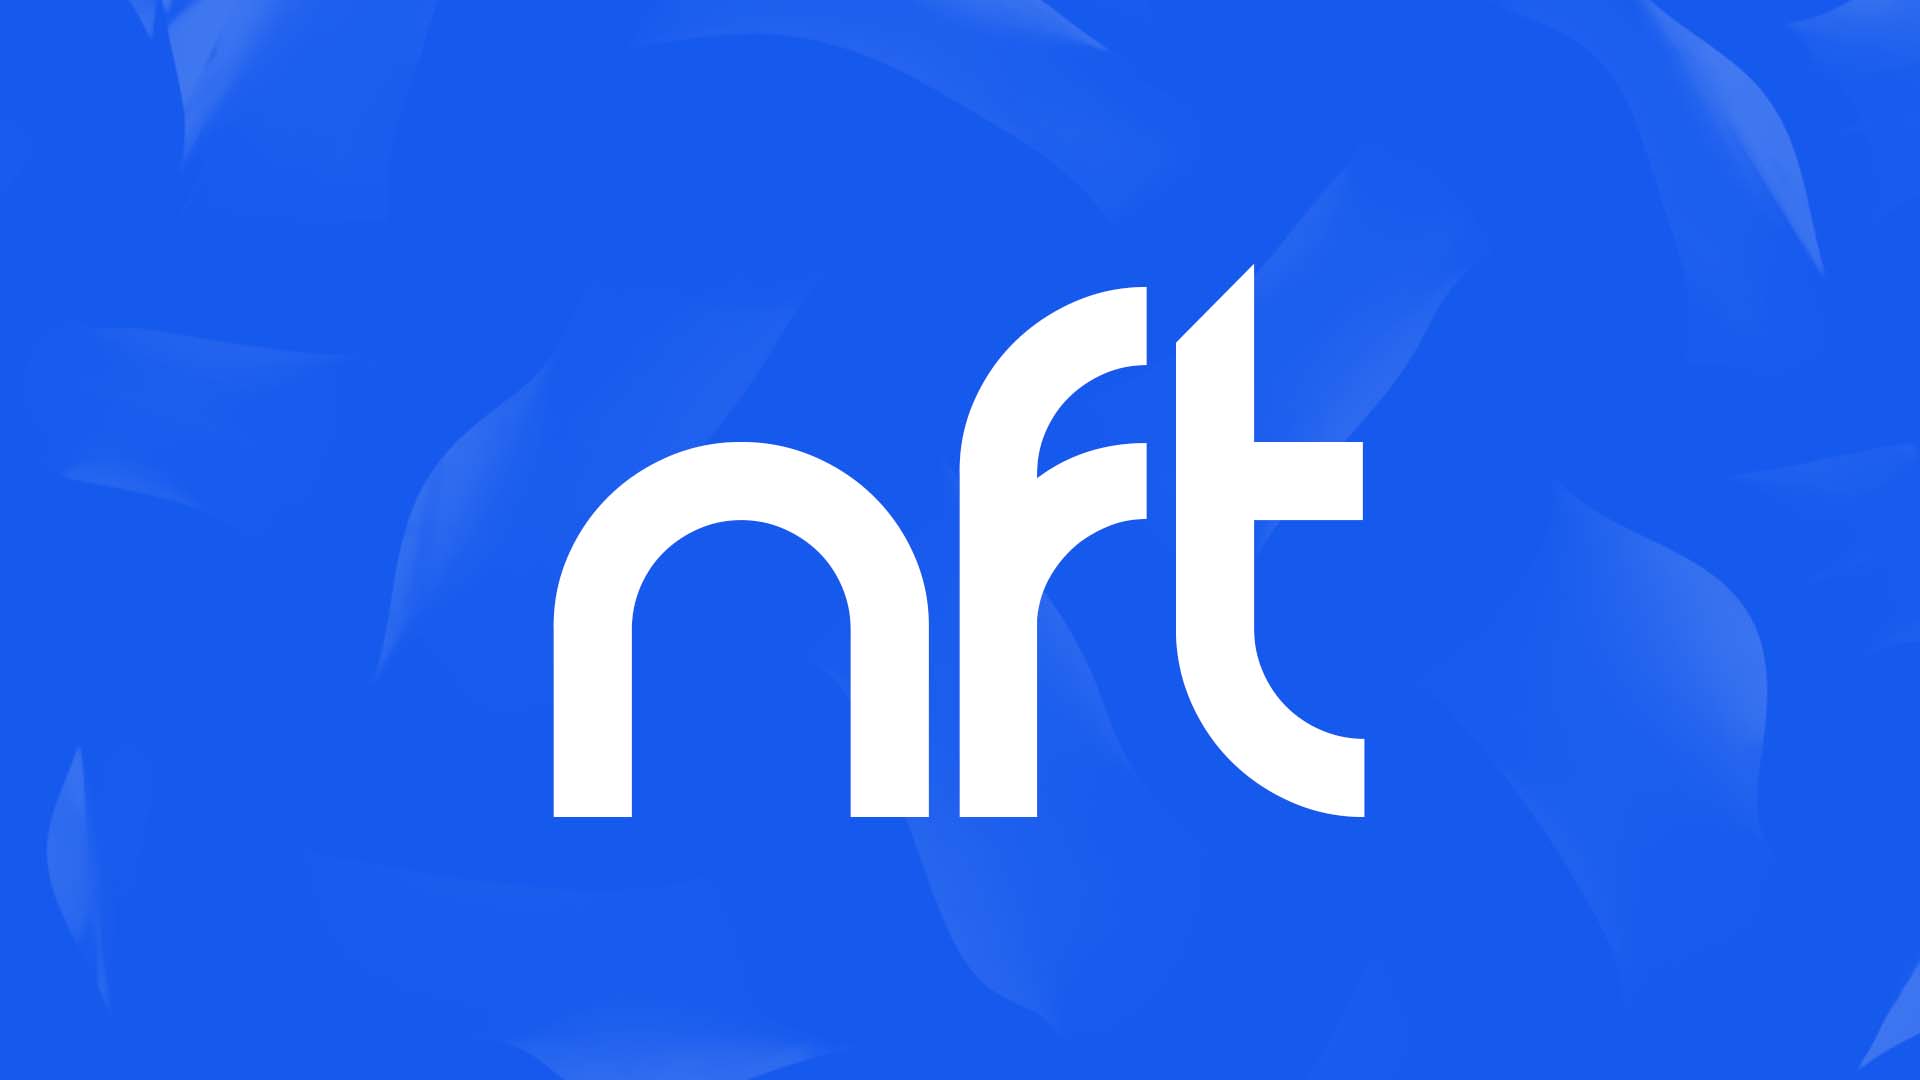 about NFTs